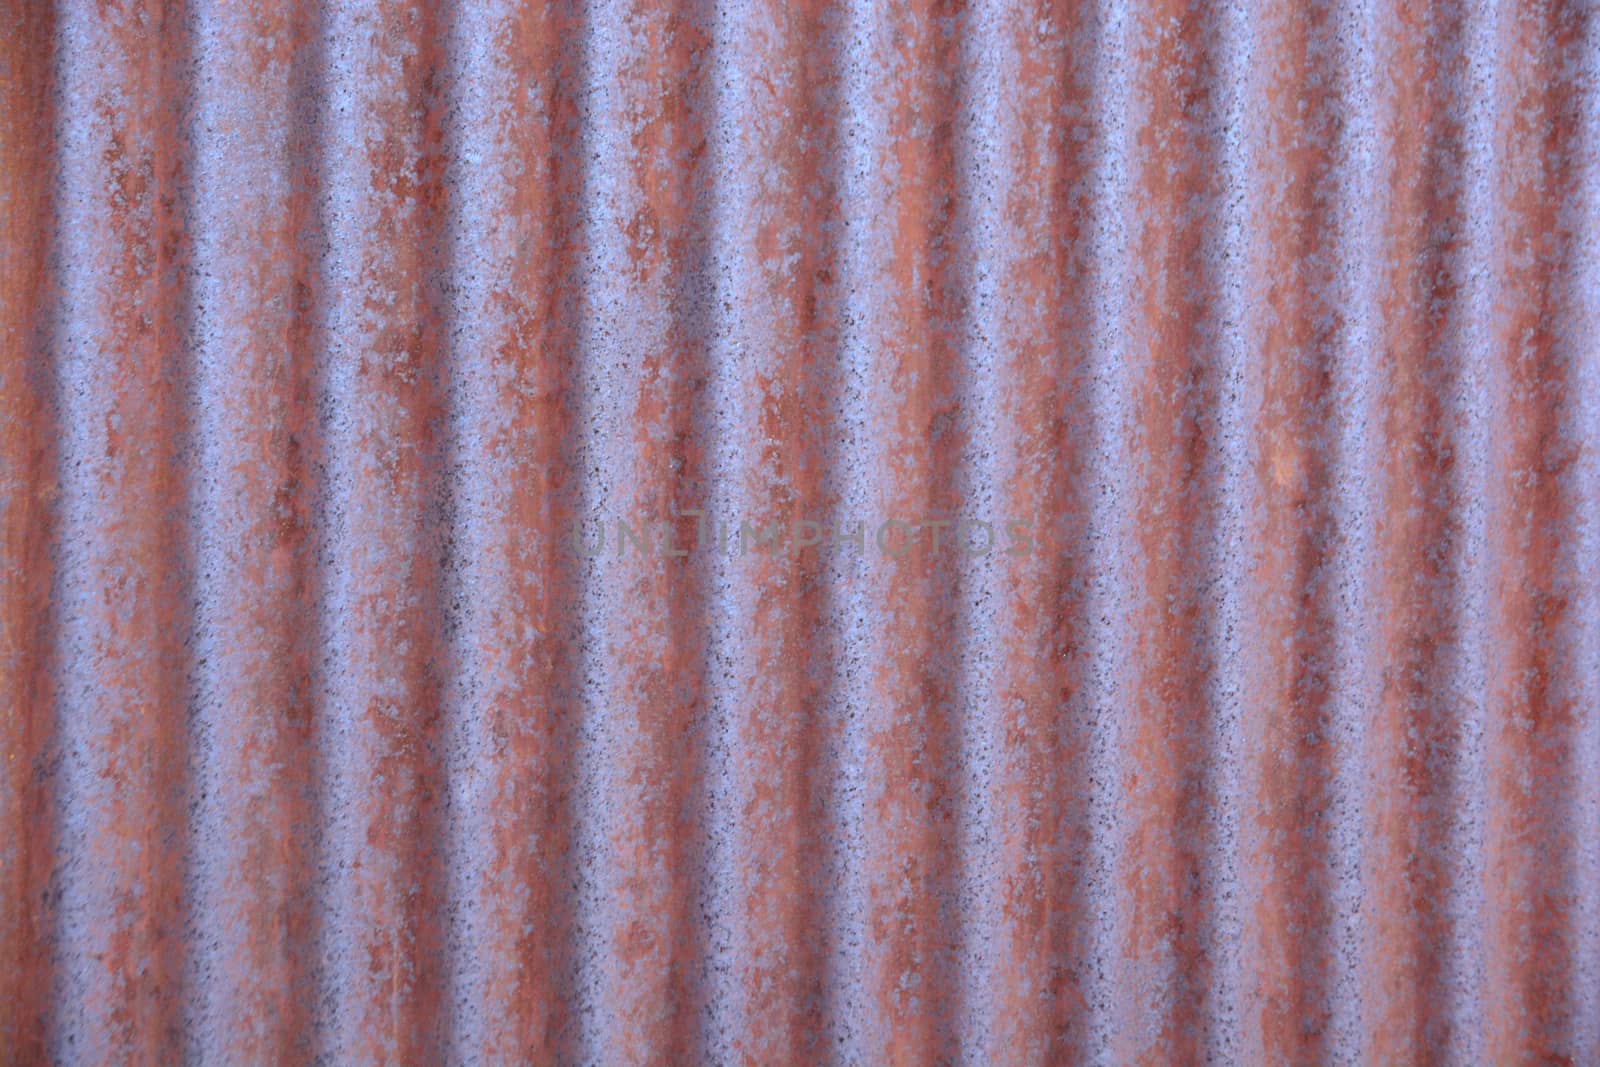 Rust texture  background